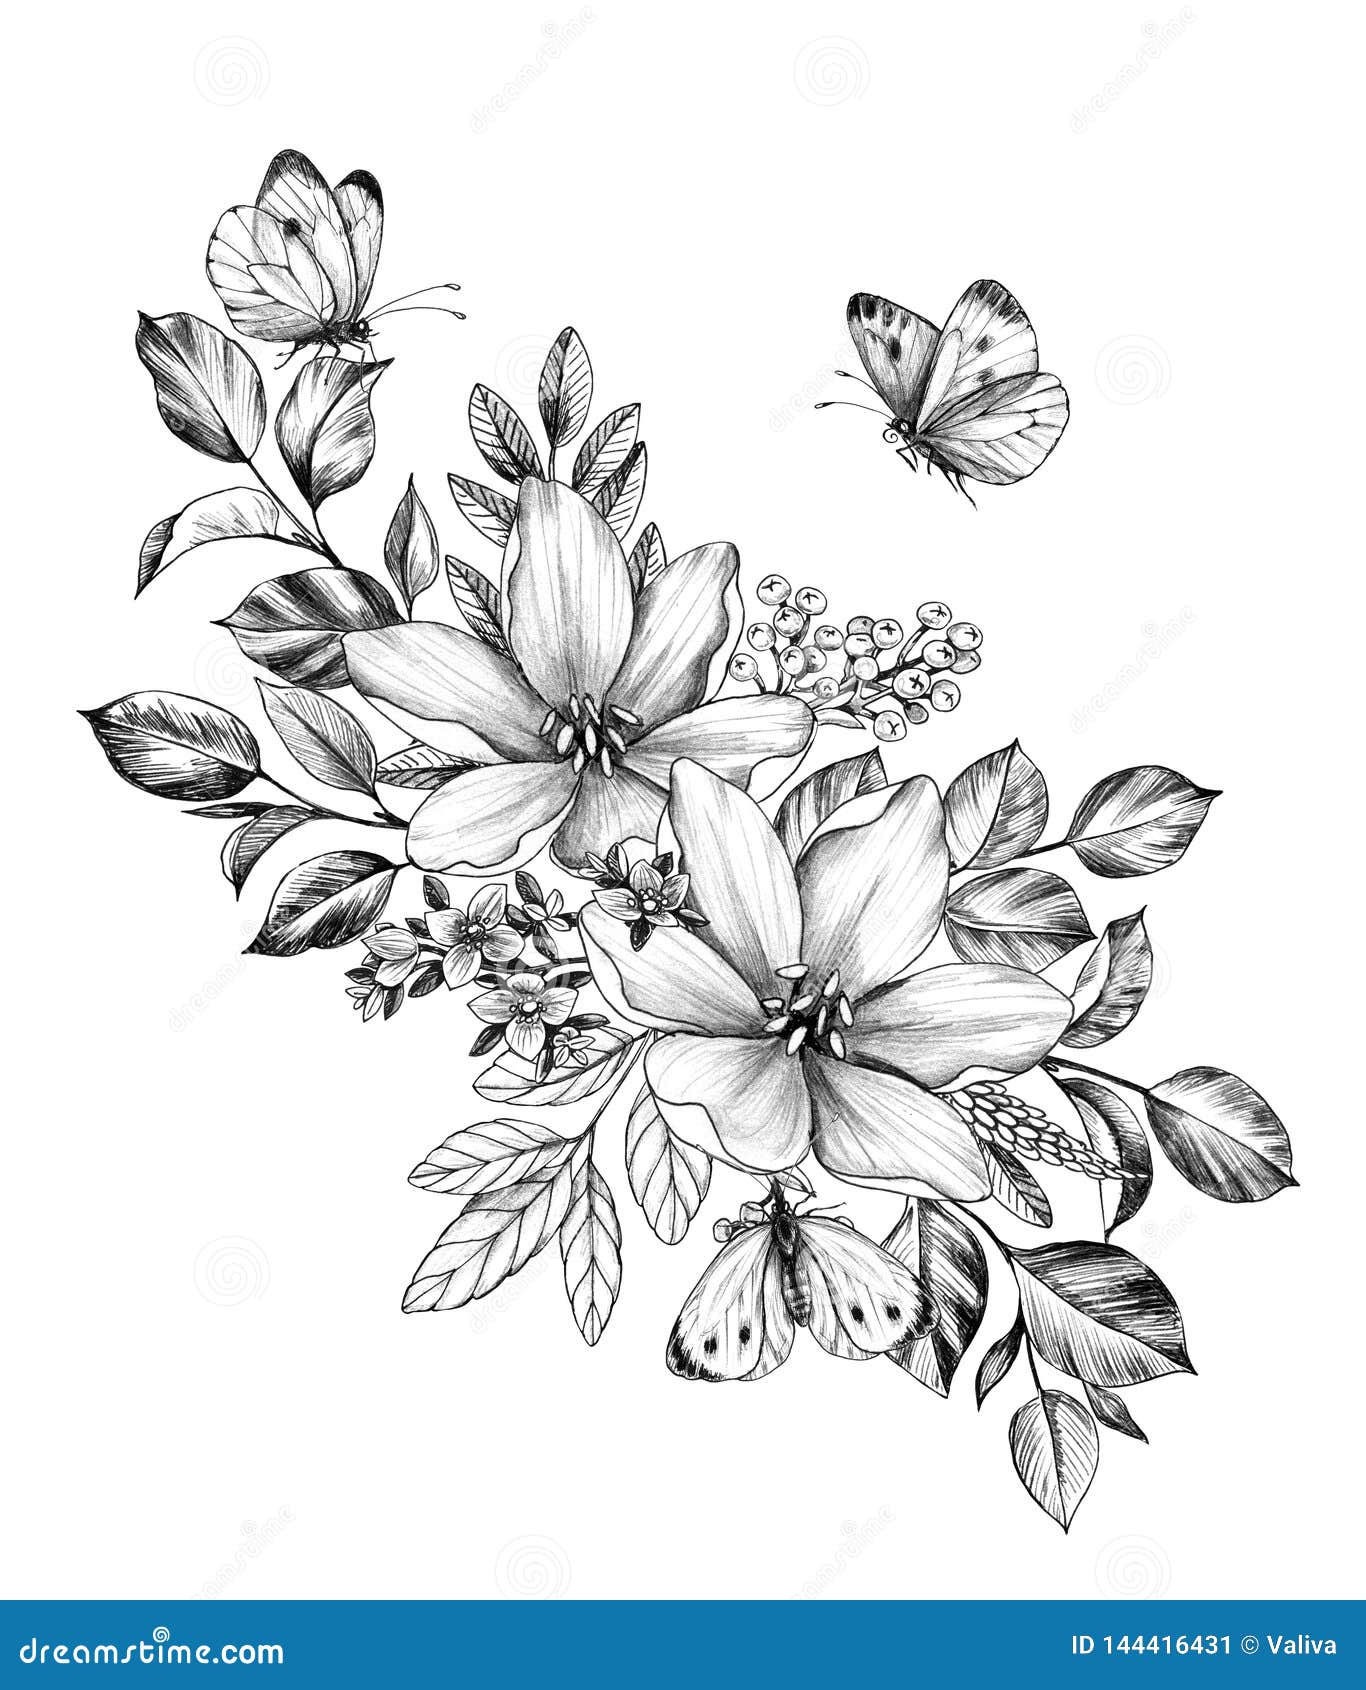 Floral Pencil Drawings - Drawing.rjuuc.edu.np